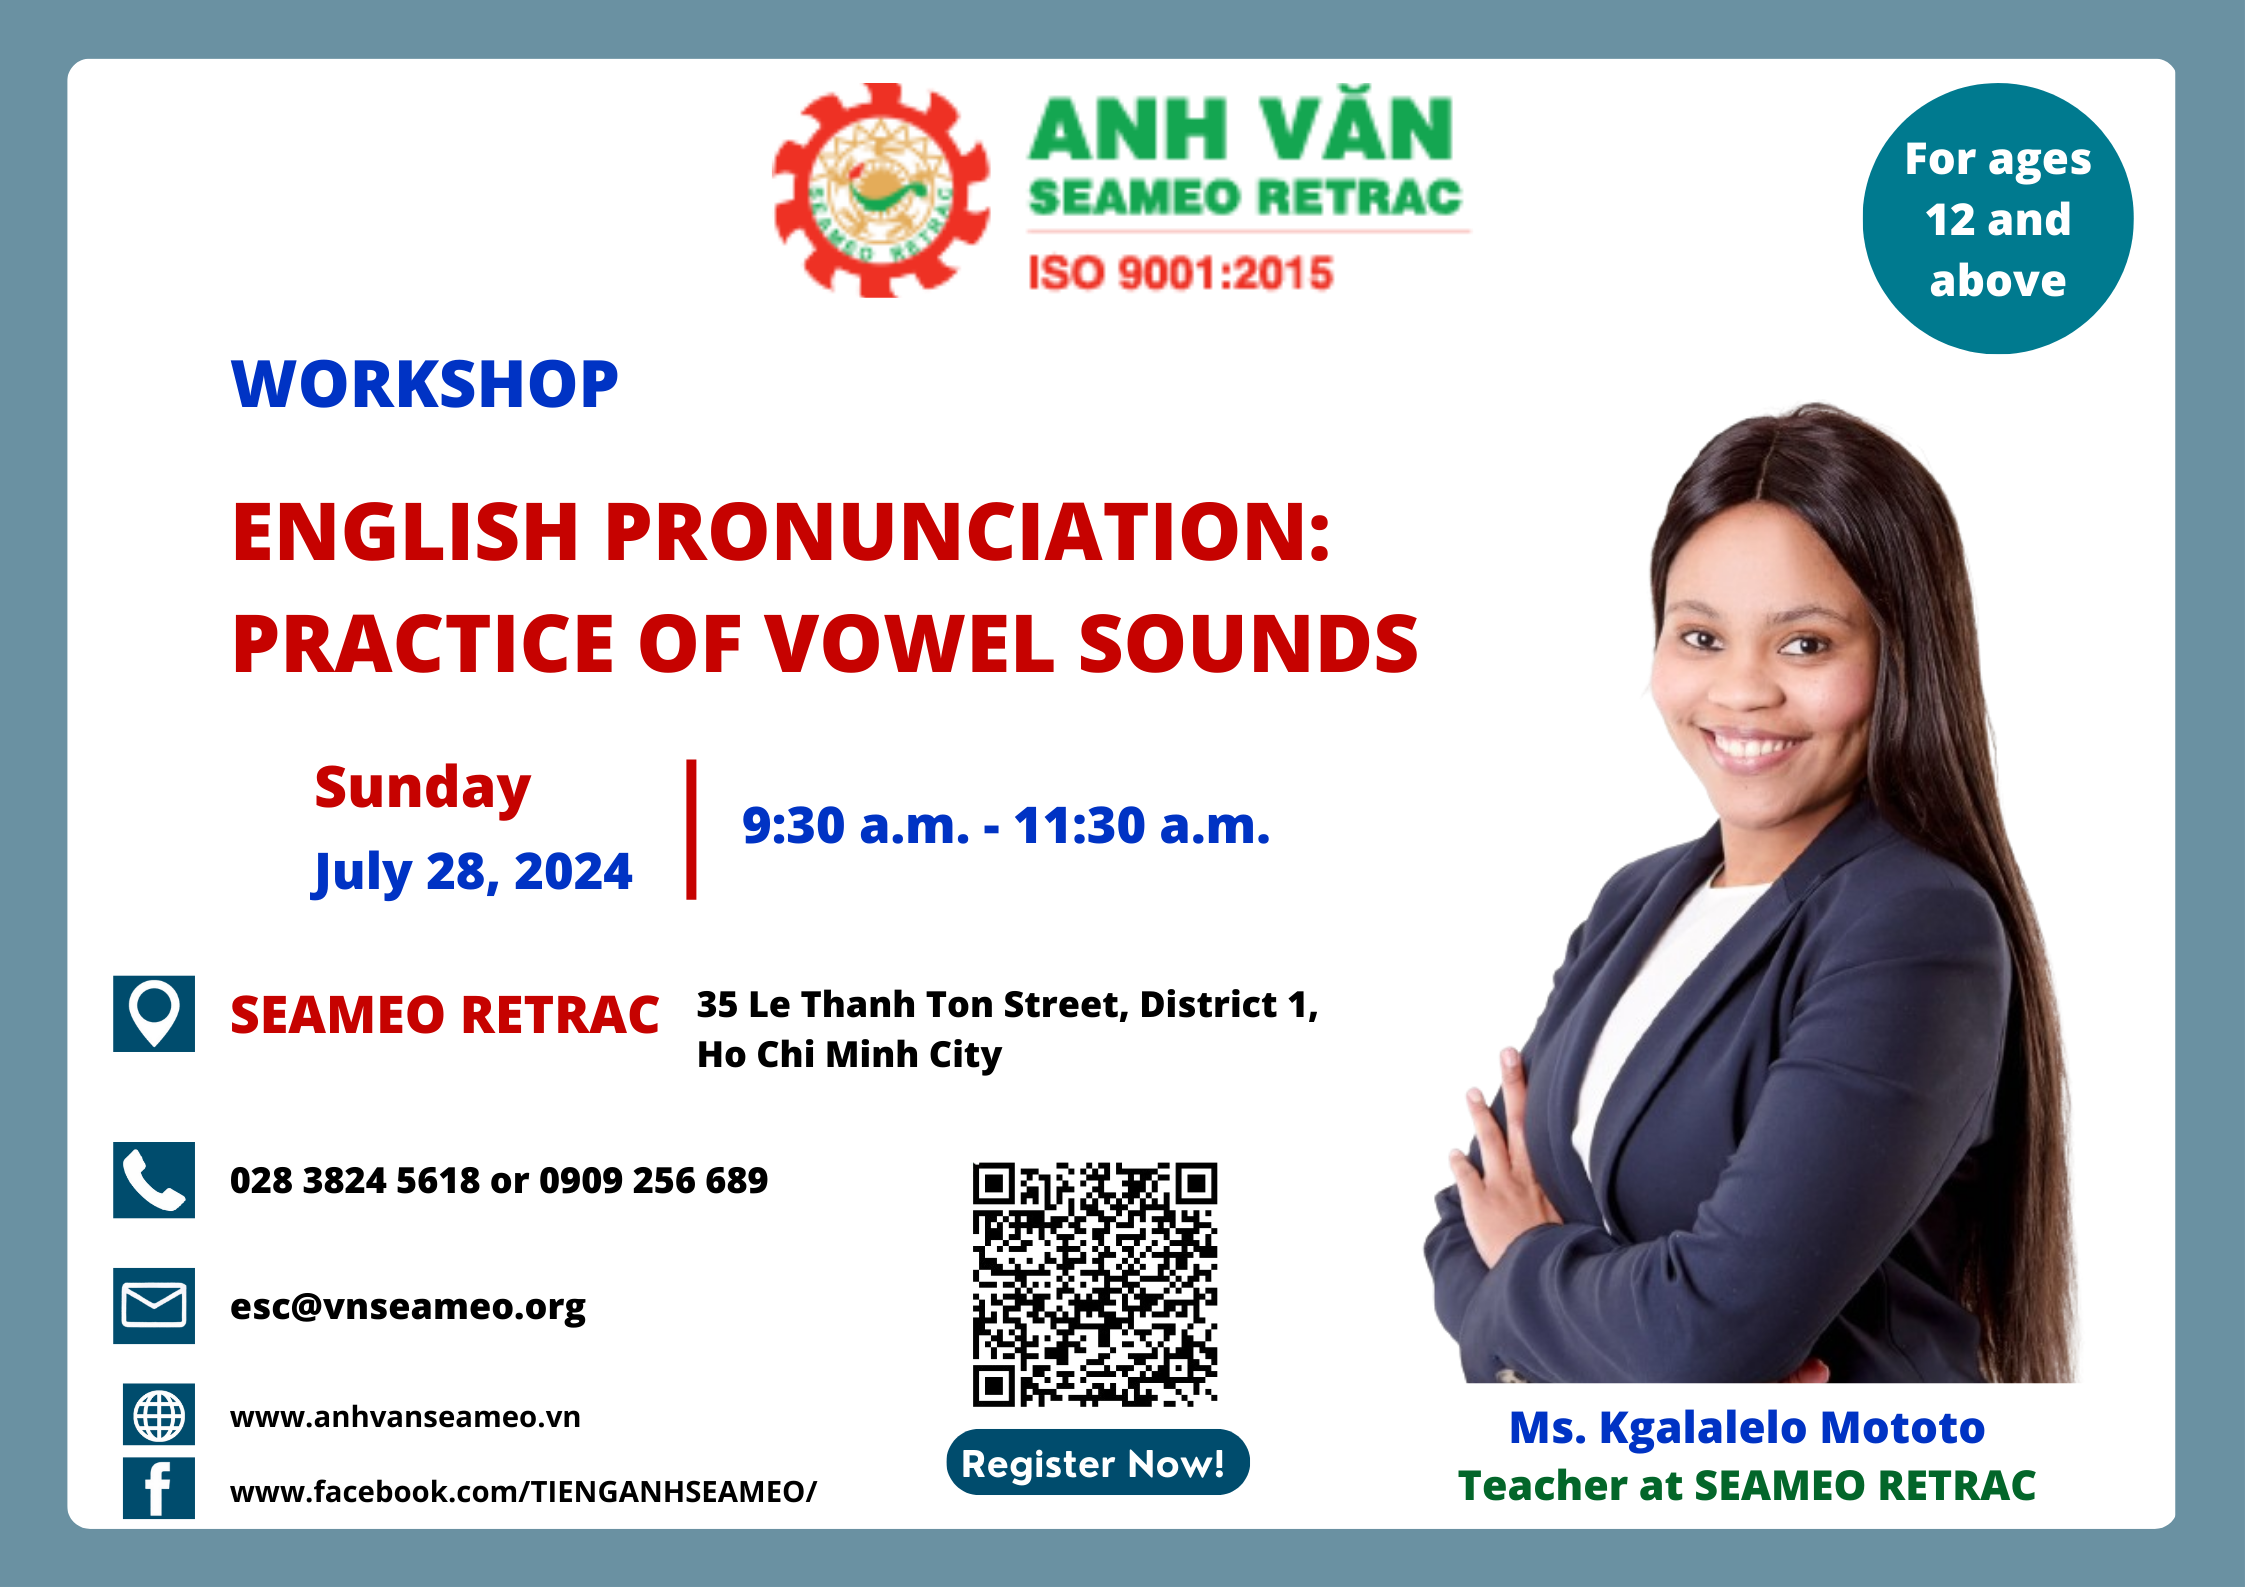 Workshop “English Pronunciation: Practice of Vowel Sounds”